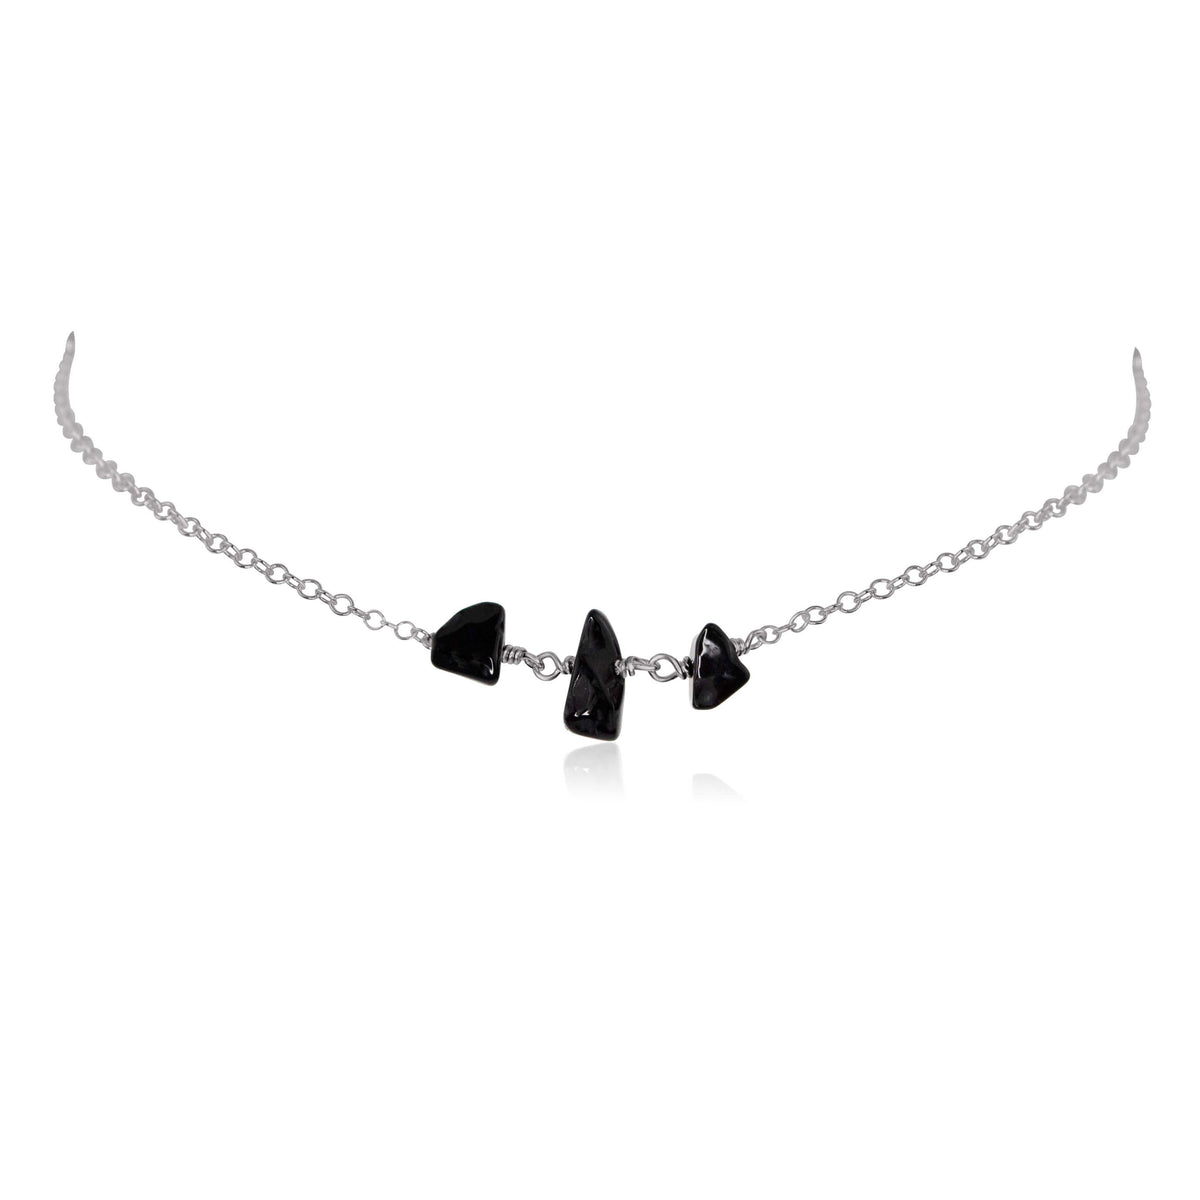 Beaded Chain Choker - Black Onyx - Stainless Steel - Luna Tide Handmade Jewellery